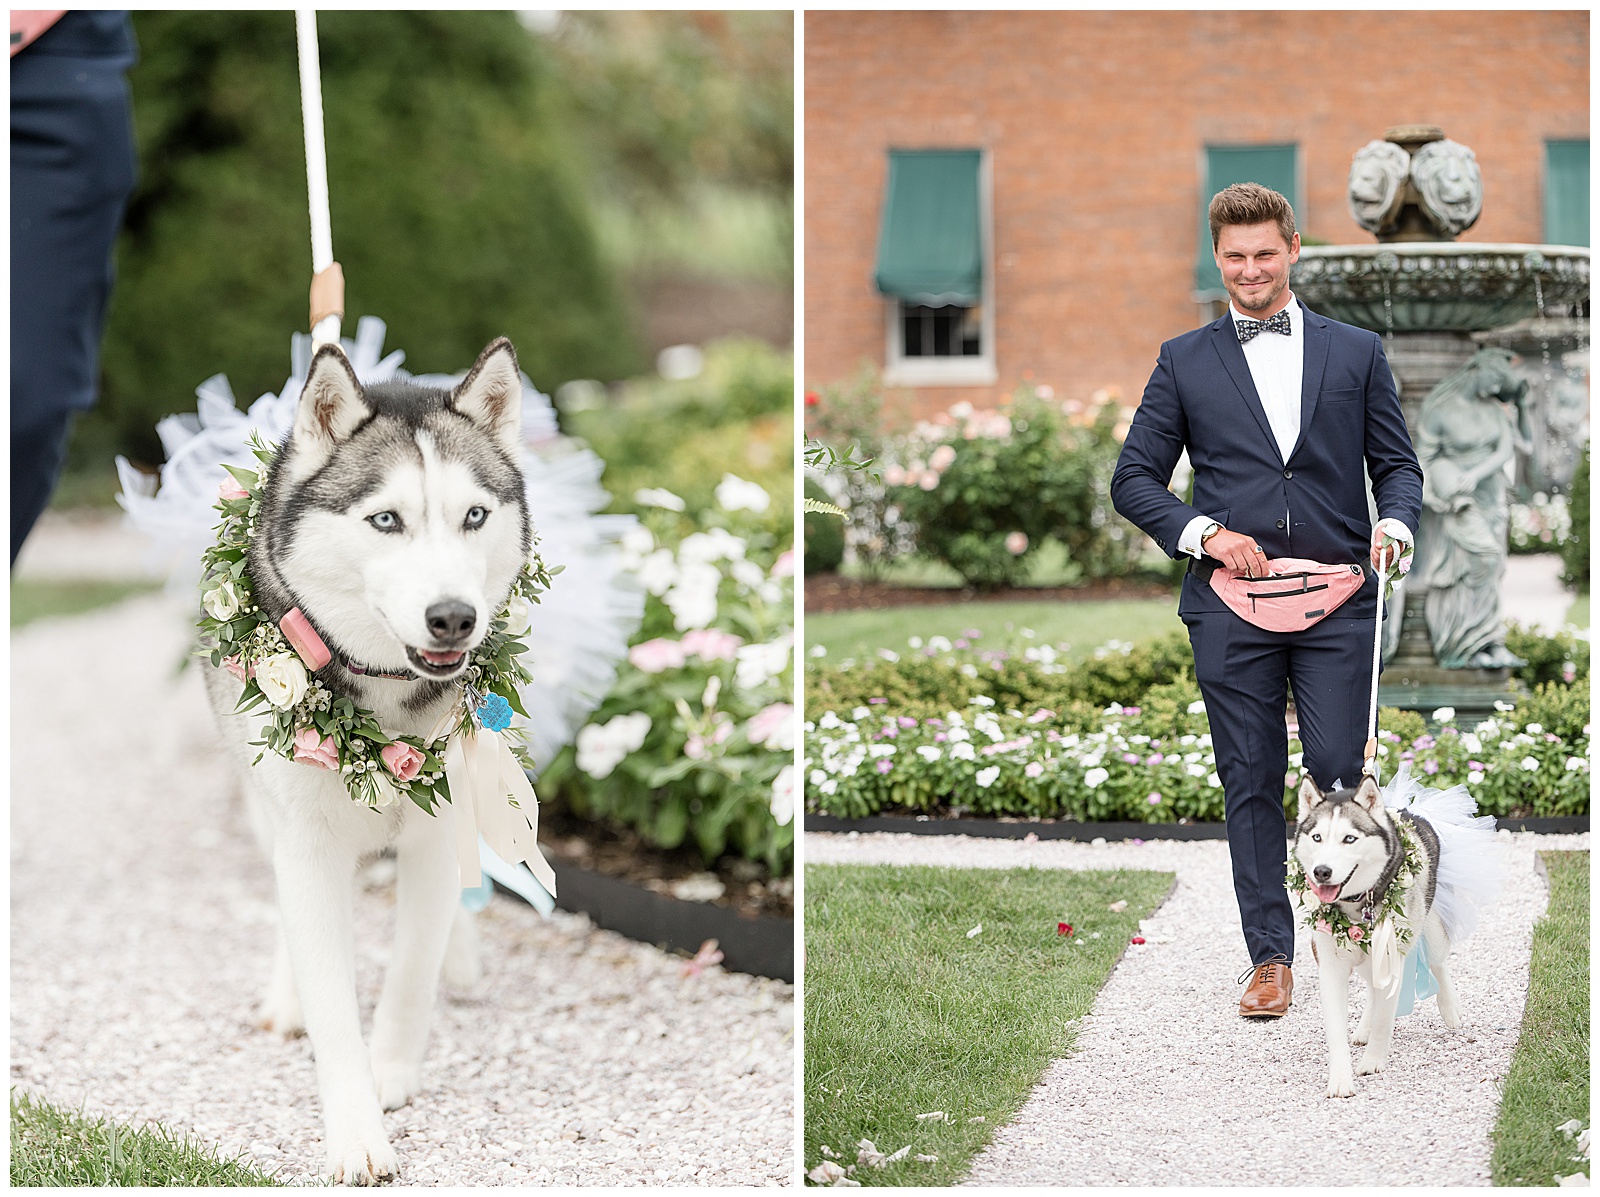 guy walking husky dog "flower girl" down the aisle as outdoor wedding ceremony begins